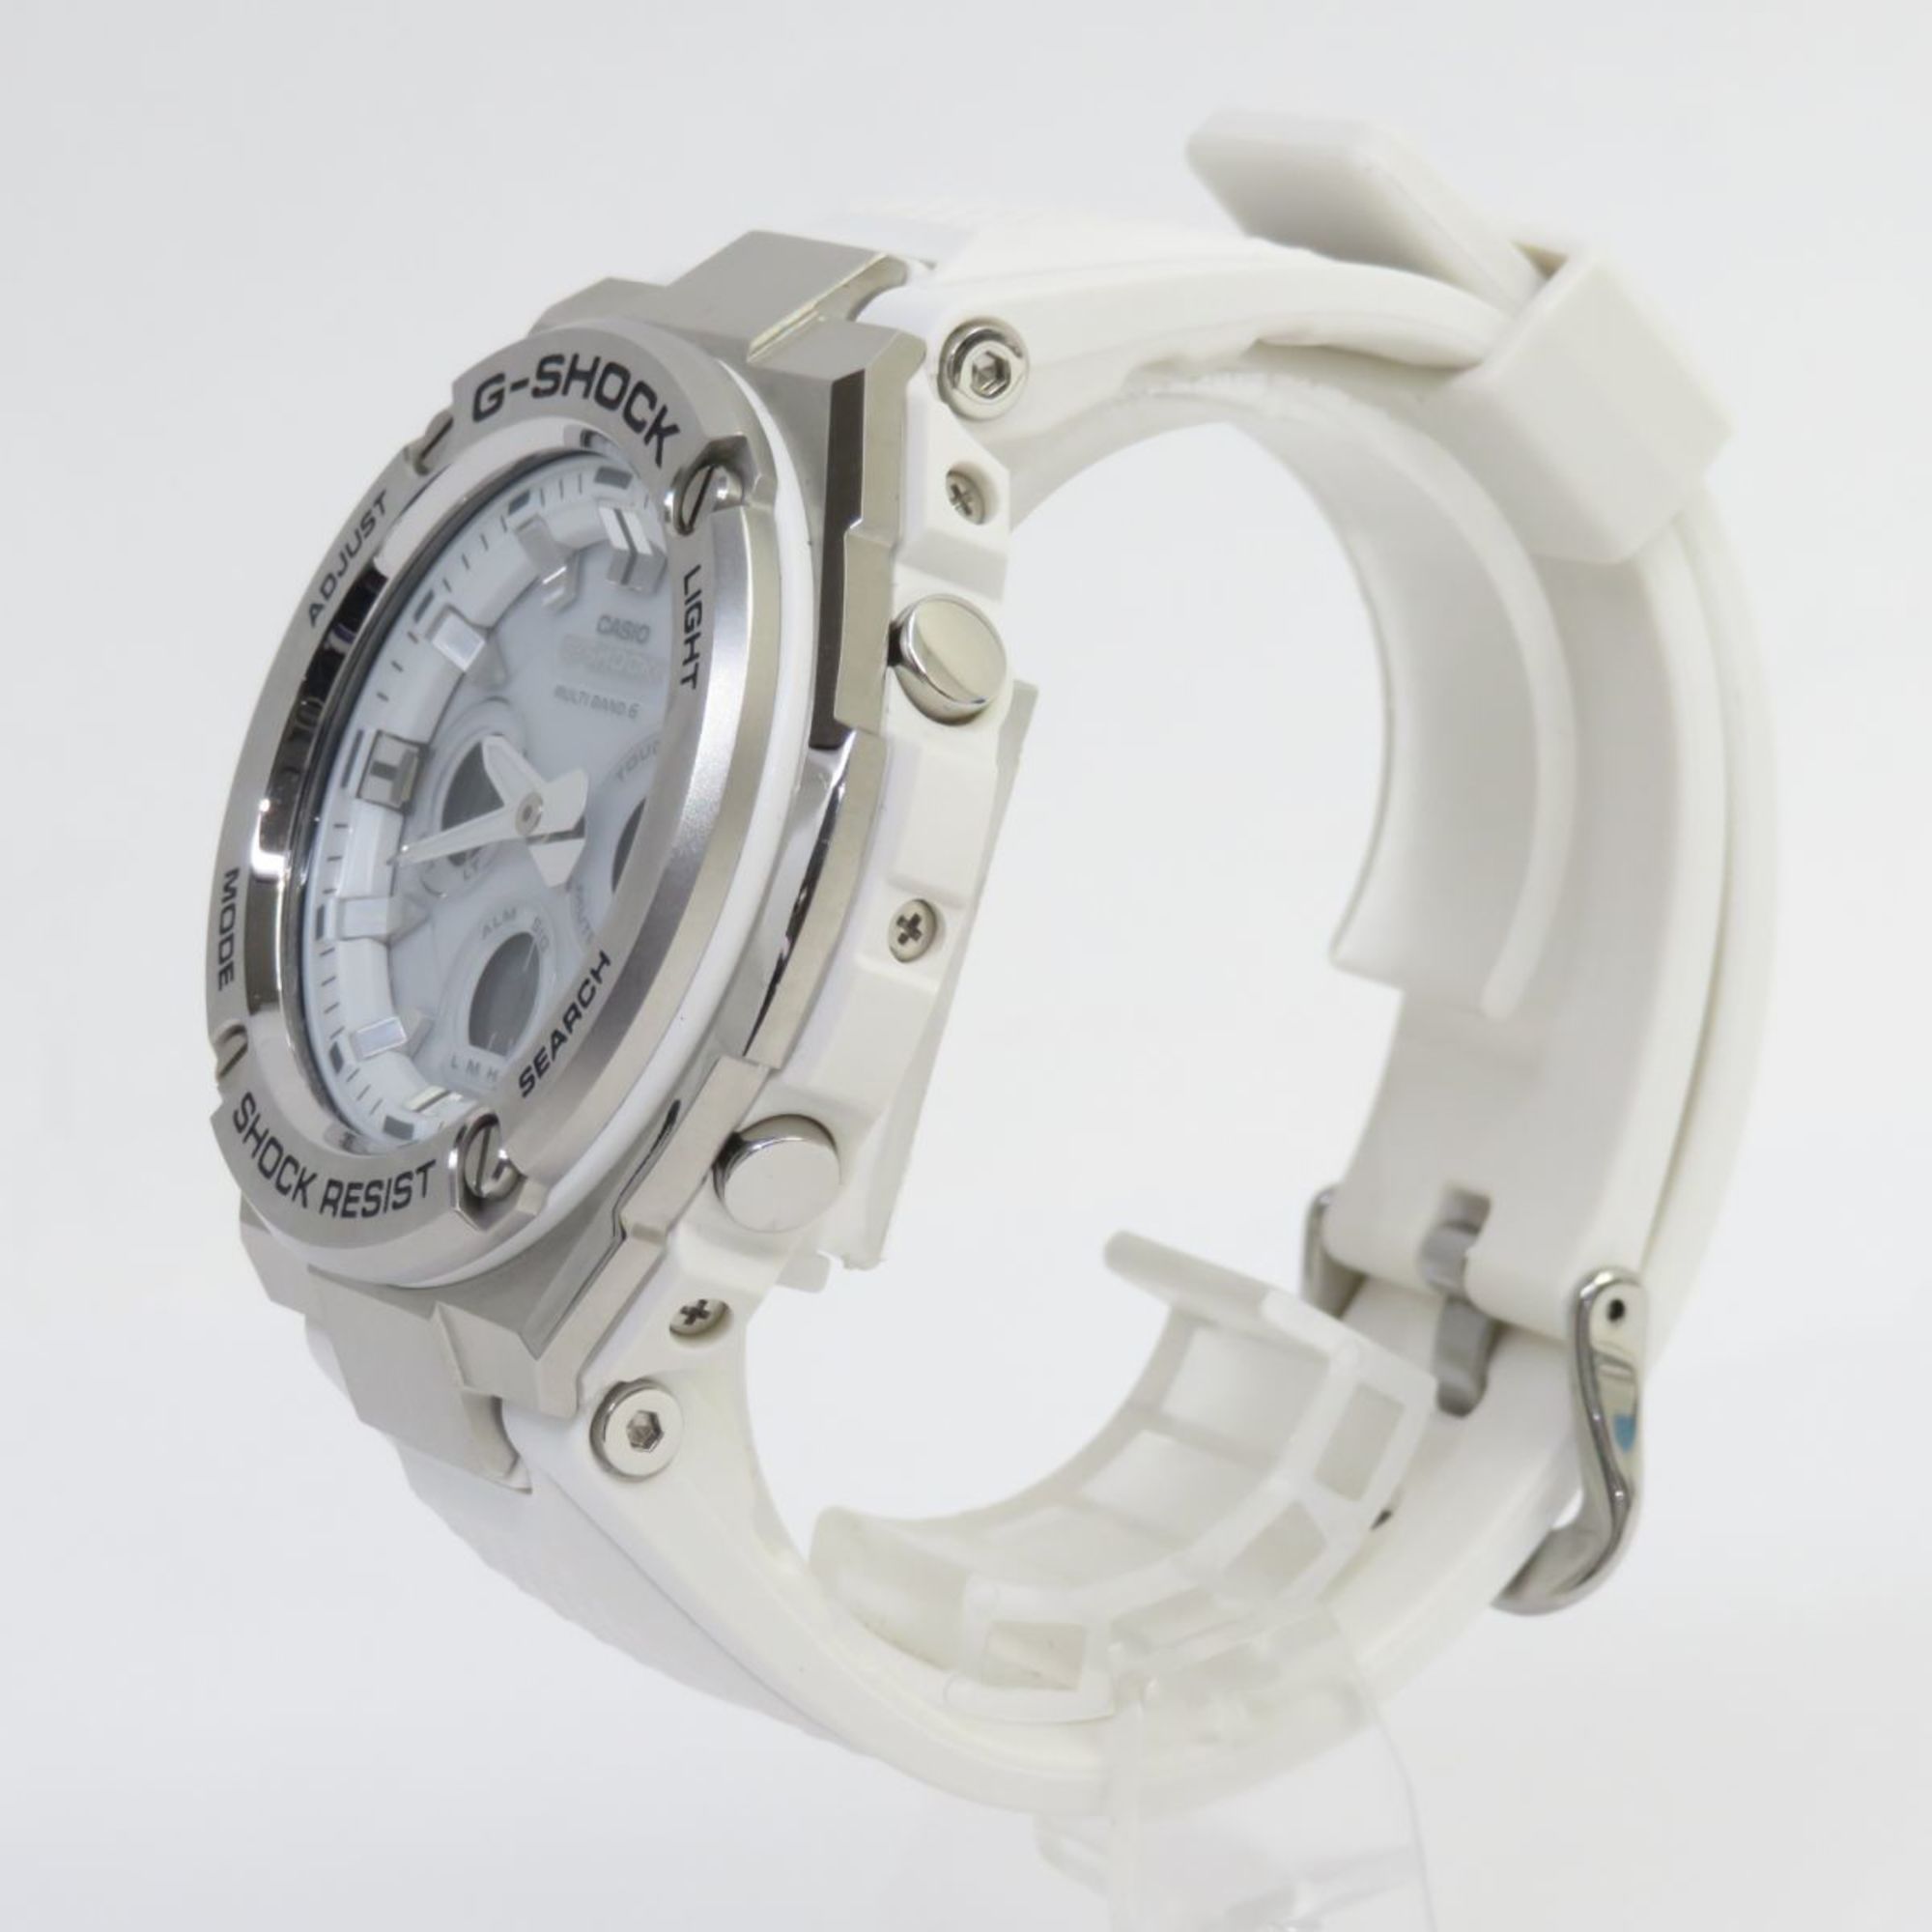 Casio G-Shock Radio Wave Control Solar Women's Watch gst-w310-7ajf